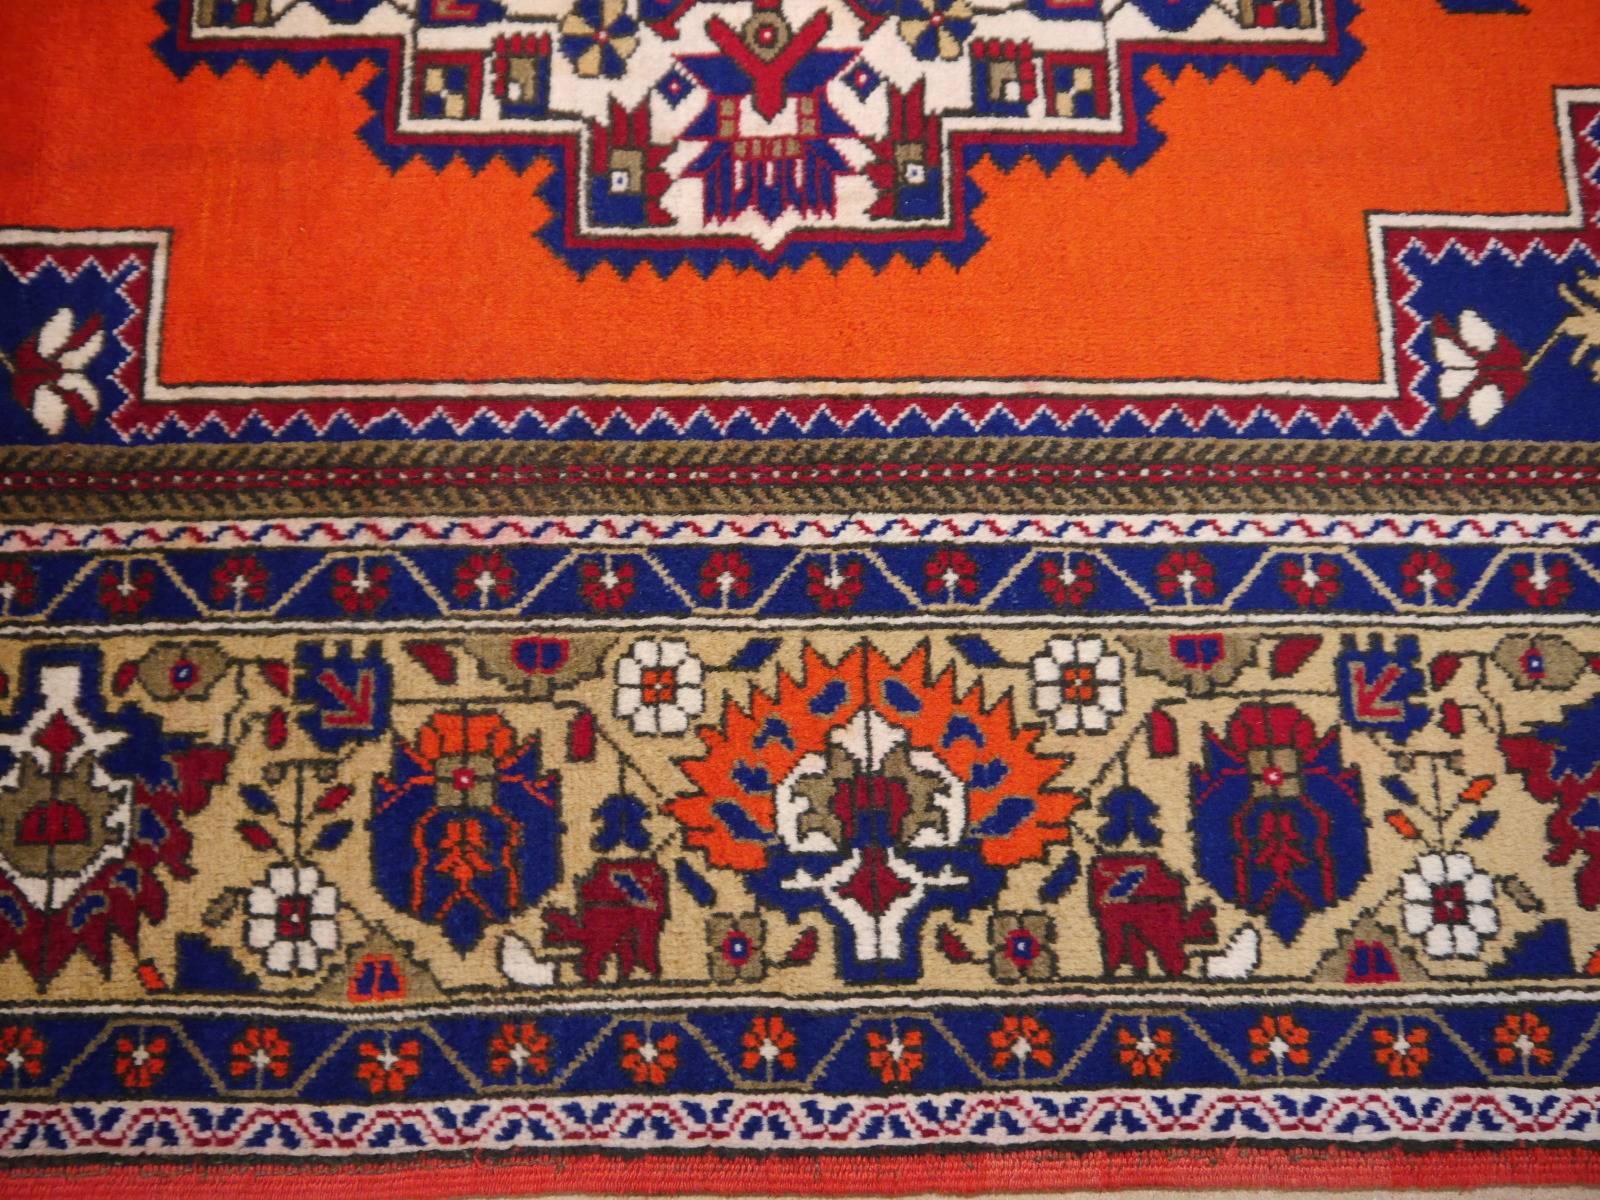 Wool Vintage Turkish Taspinar Rug hand knotted blue and orange For Sale